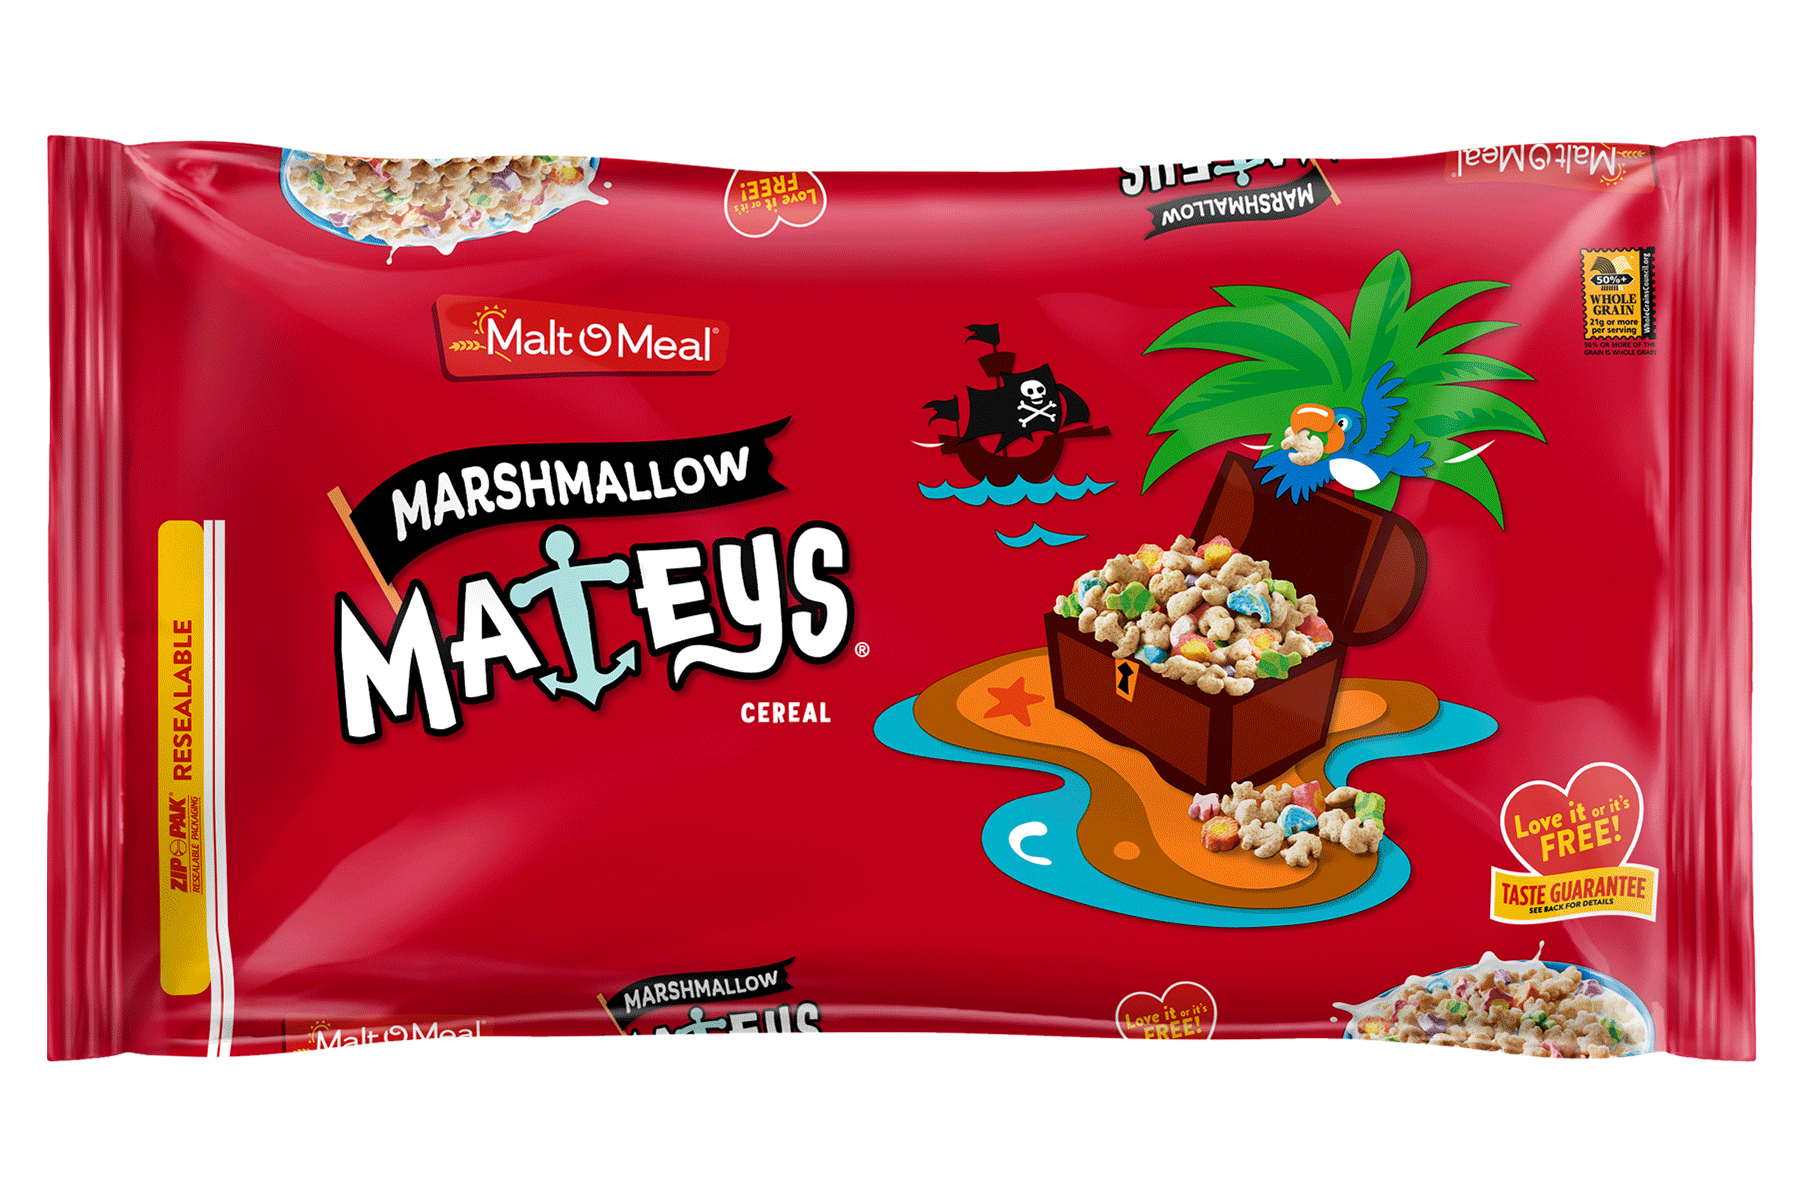 New Malt-O-Meal Marshmallow Mateys Cereal Bag